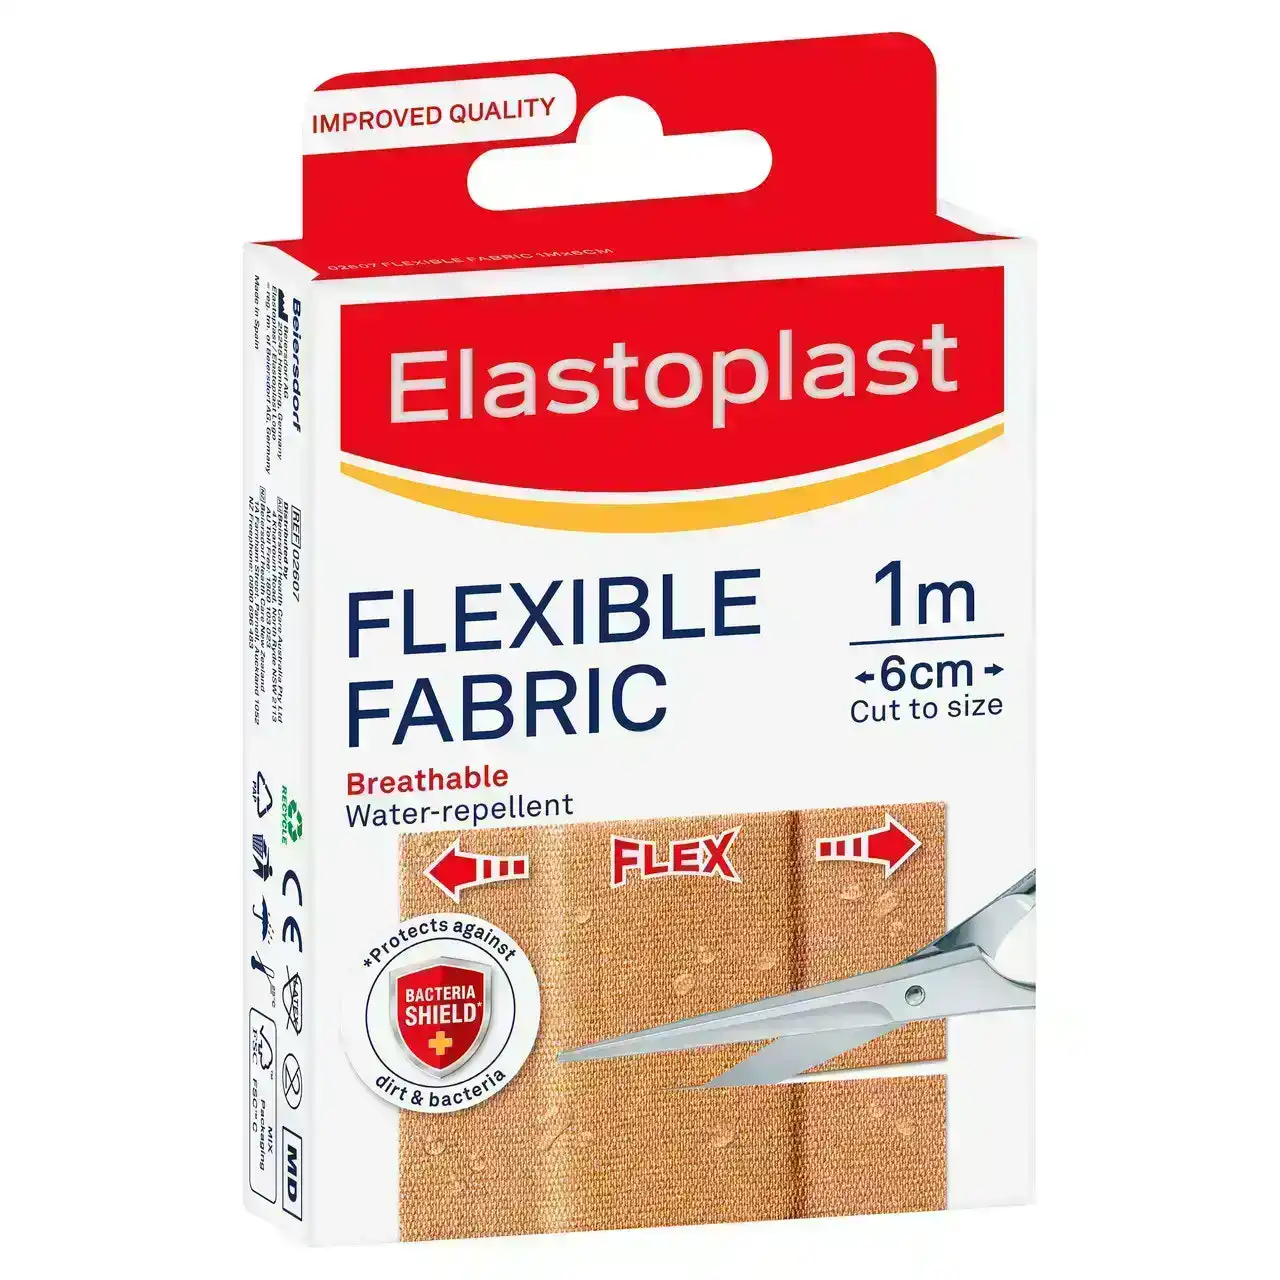 Elastoplast Flexible Fabric Cut to Size 1m